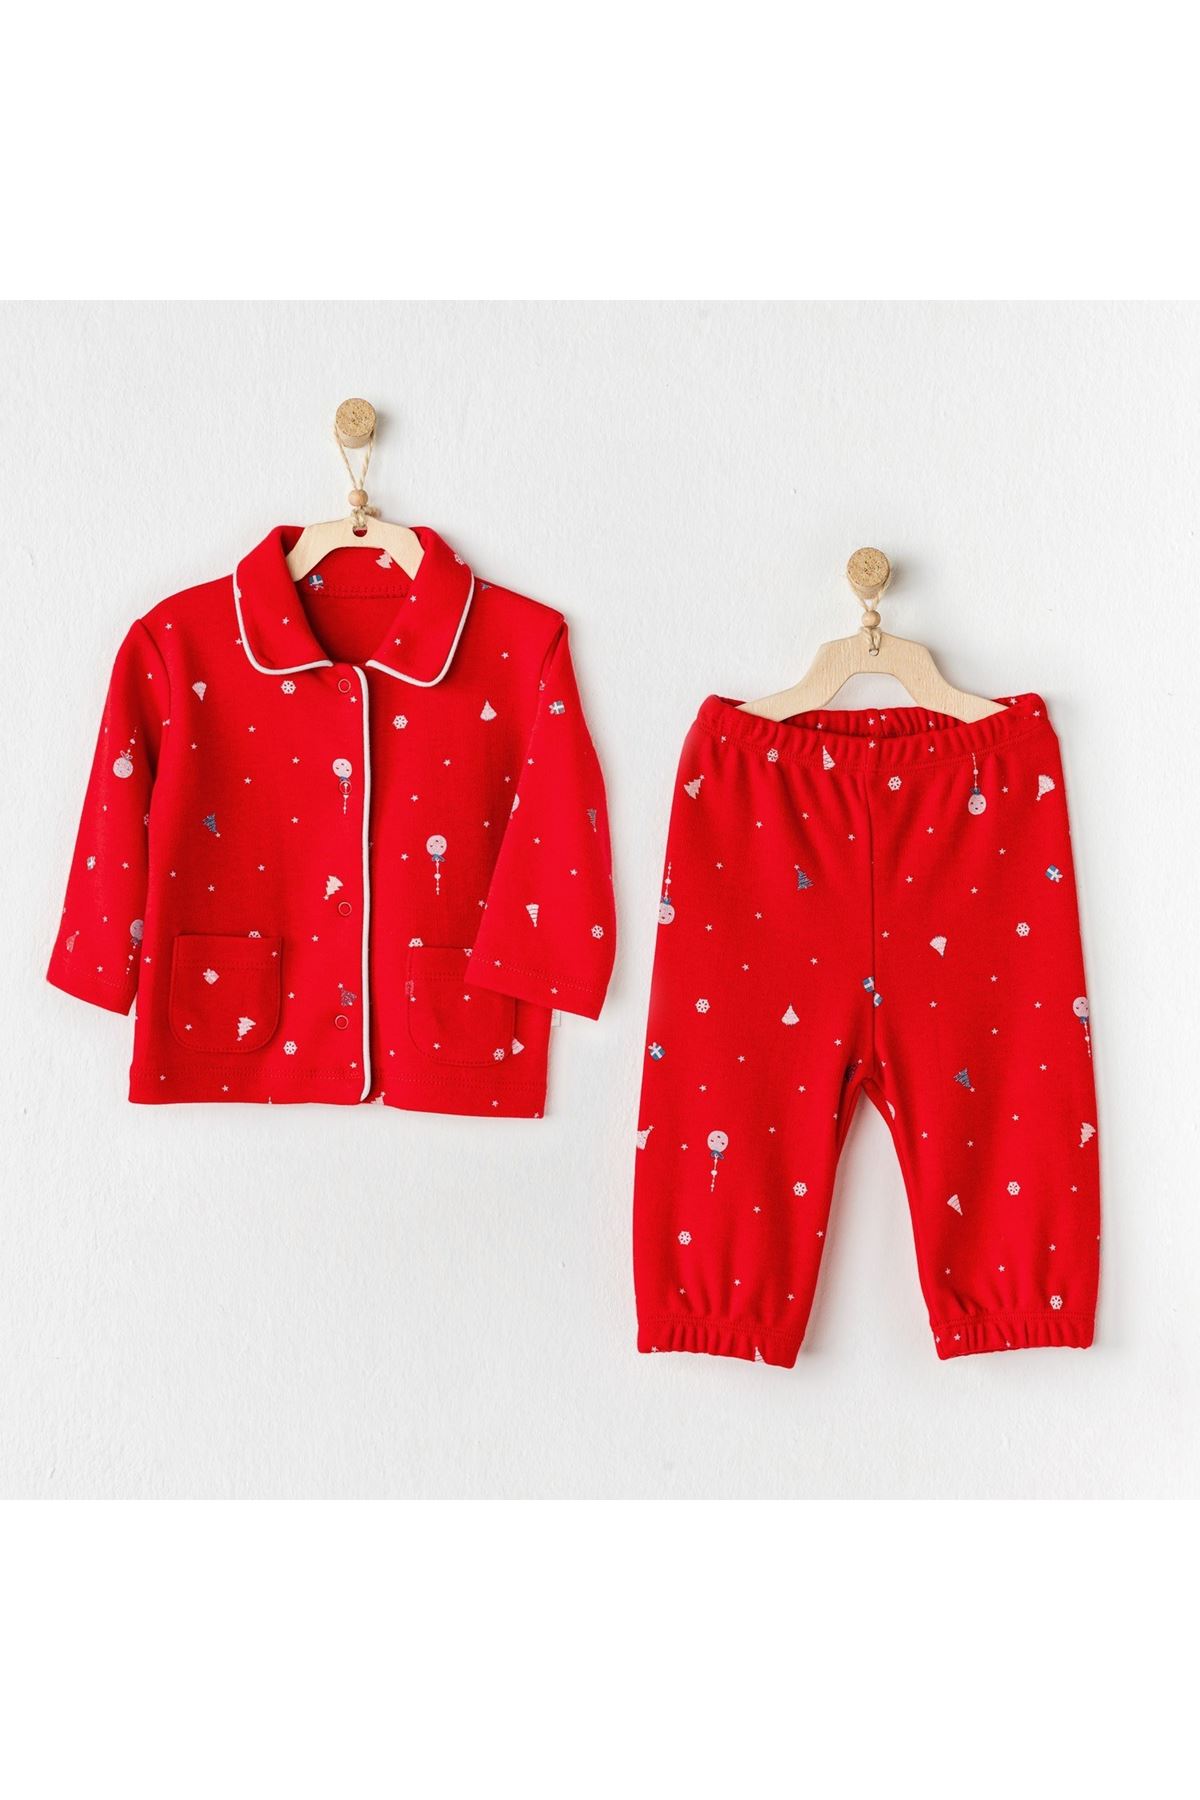 Andywawa AC24432 New Year Bebek Pijama Takımı Red